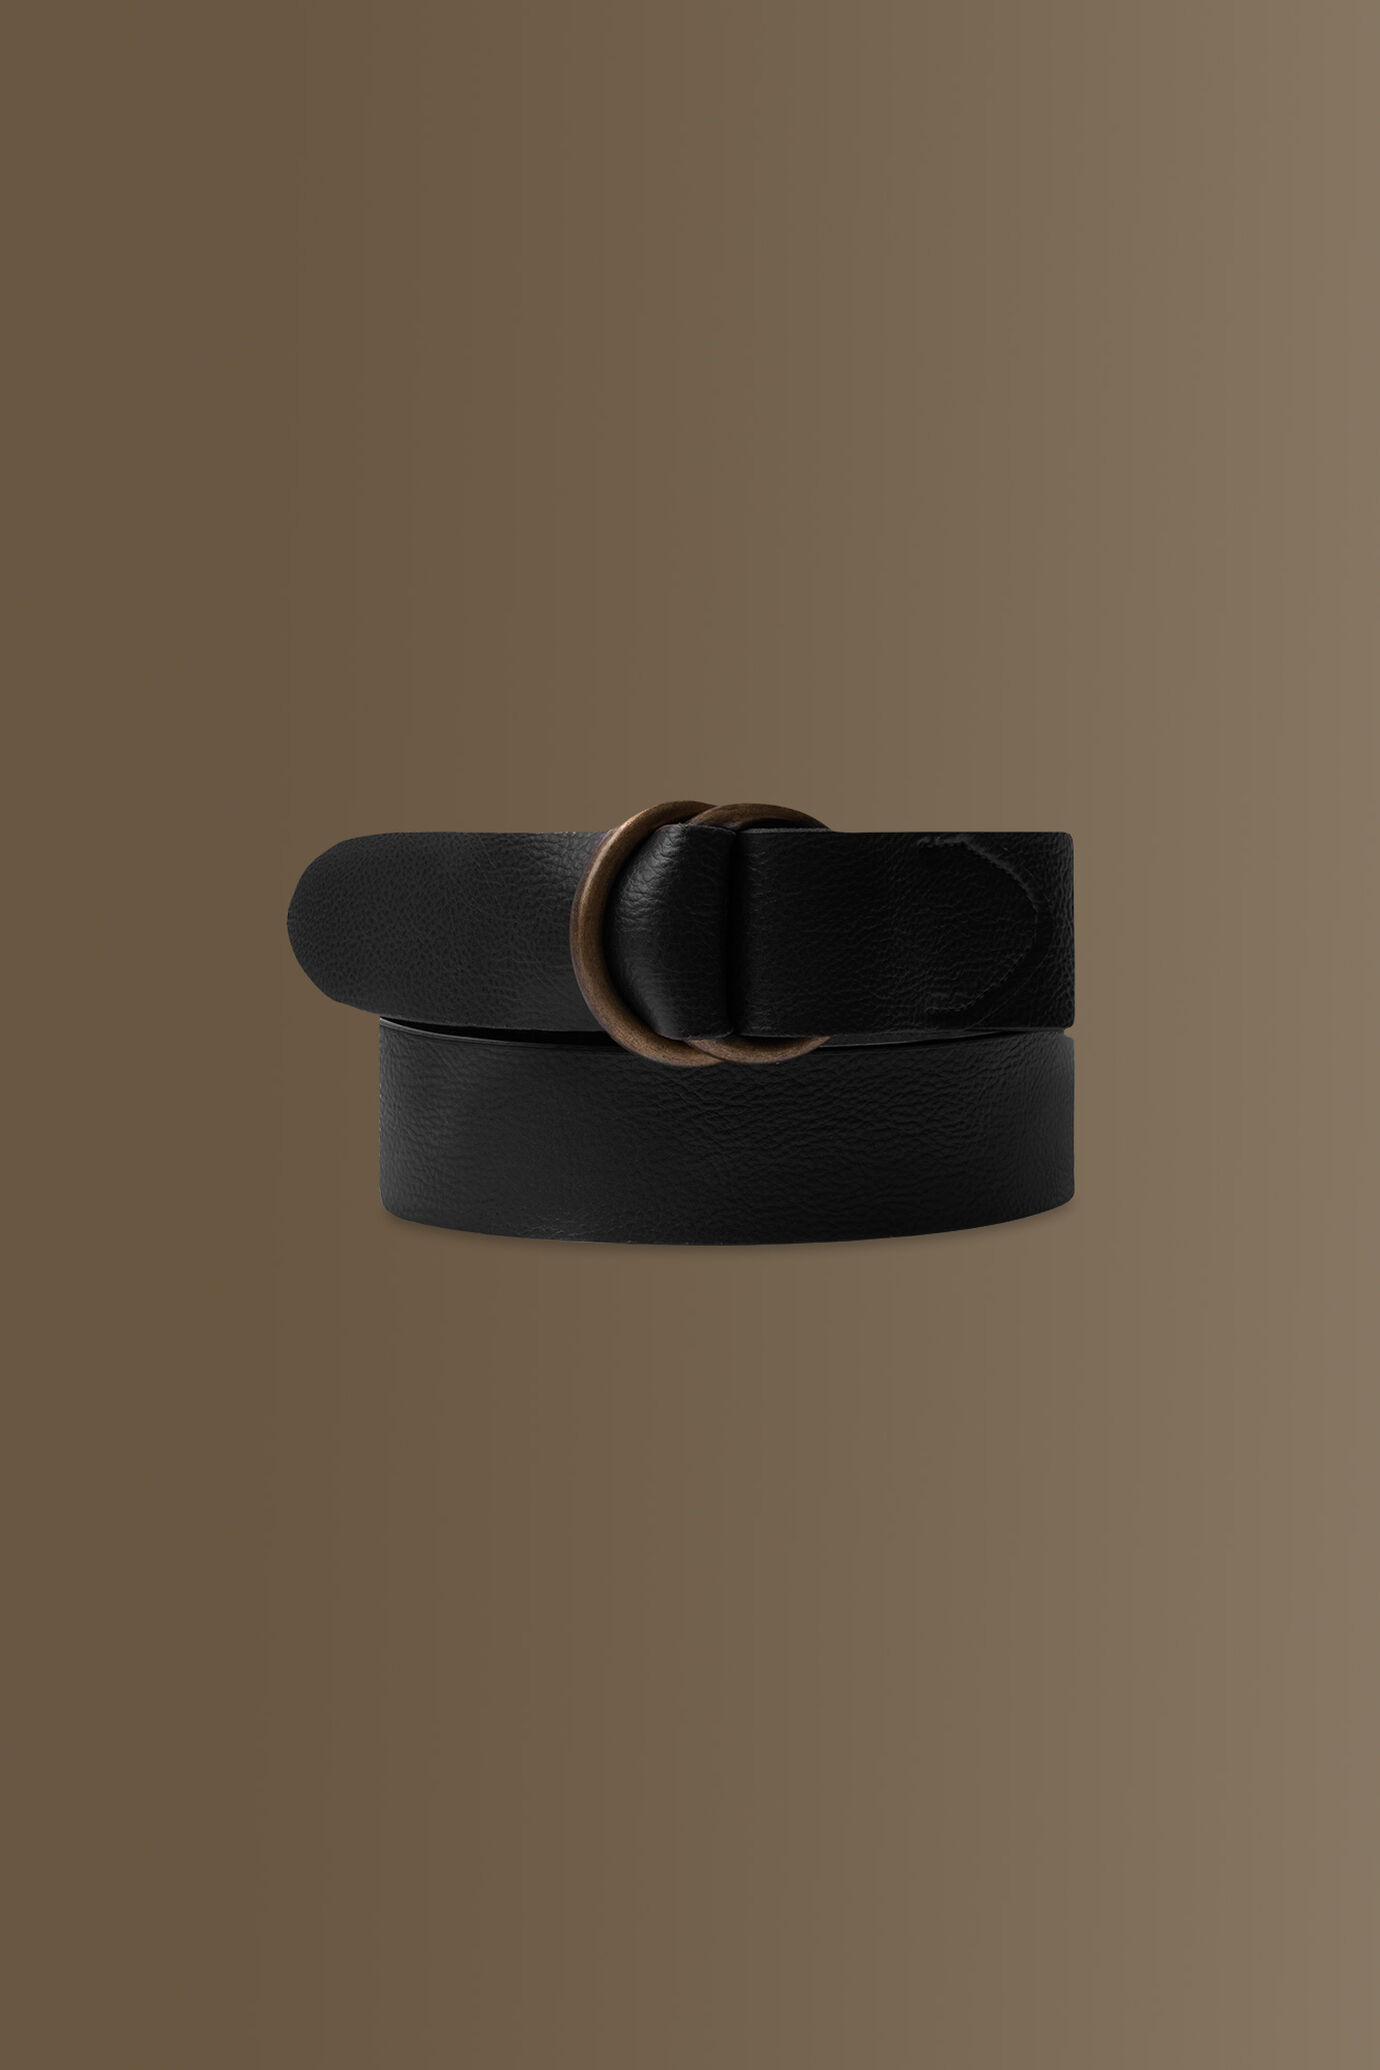 Adjustable belt combined leather